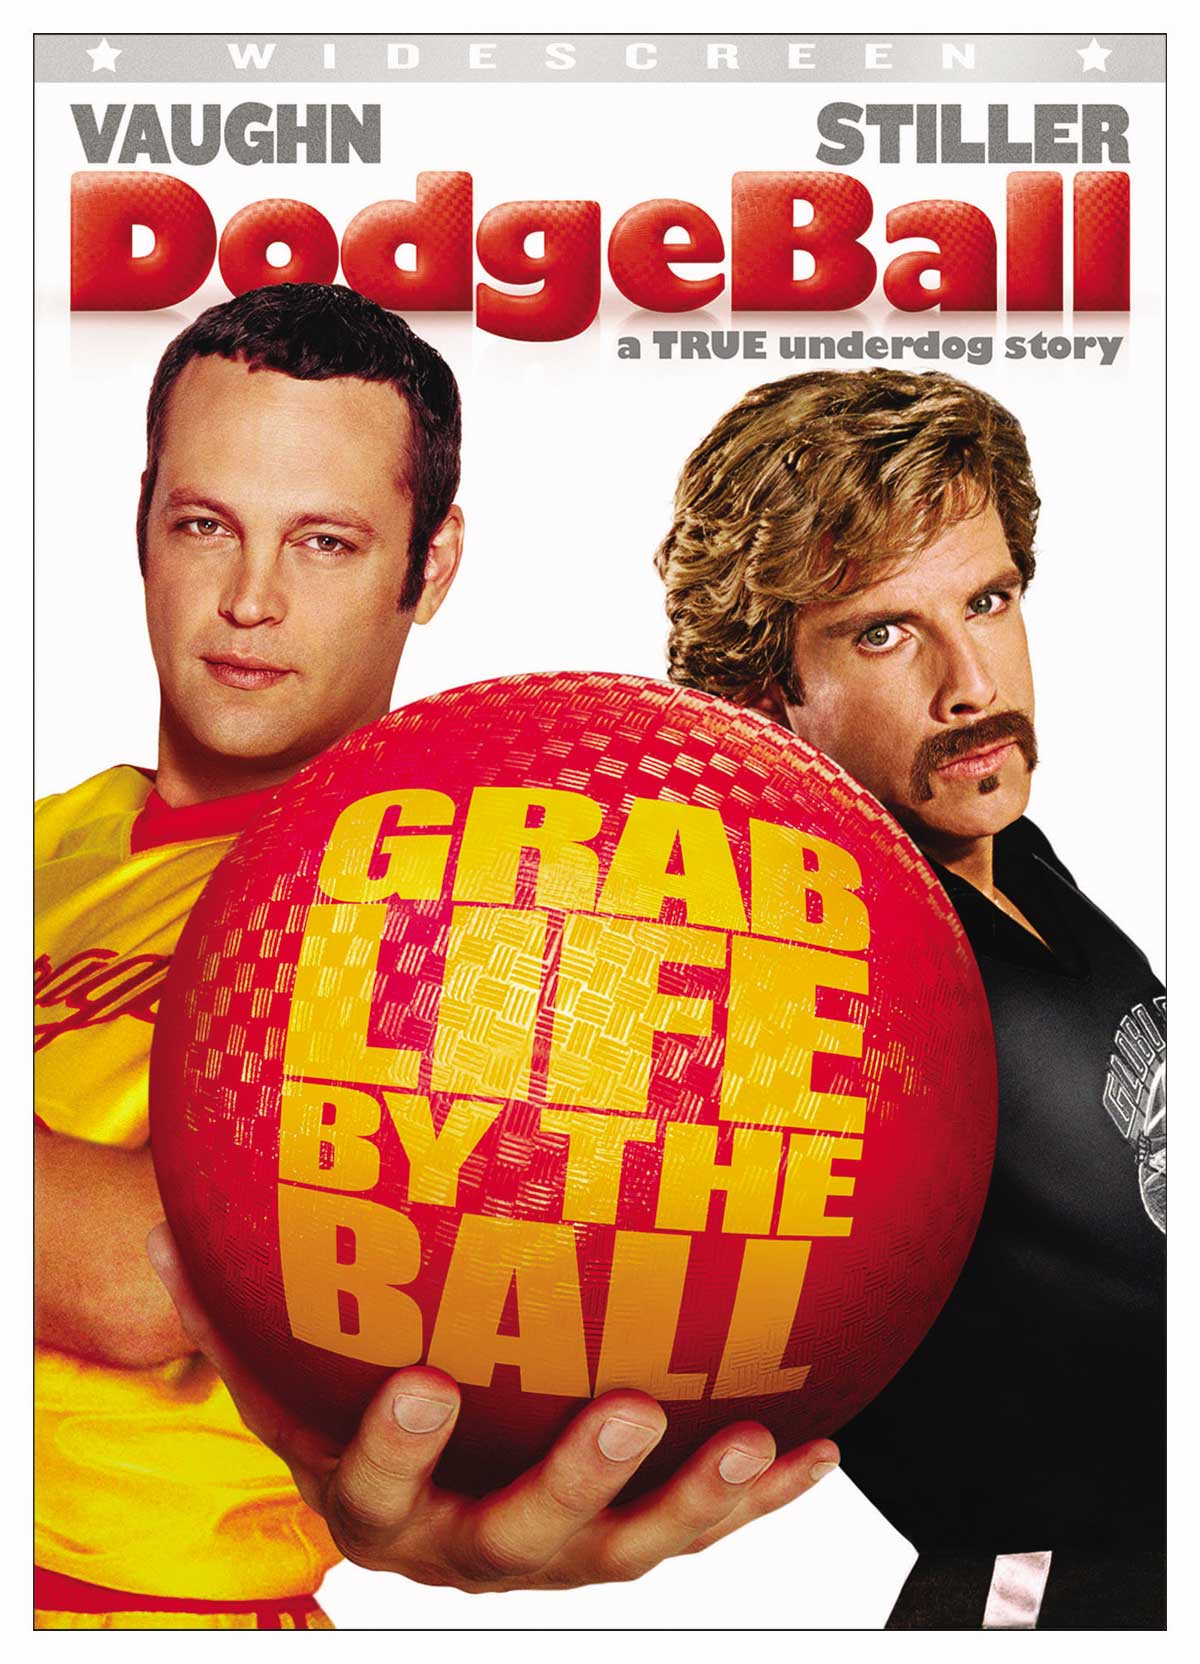 DVD Cover for Dodgeball